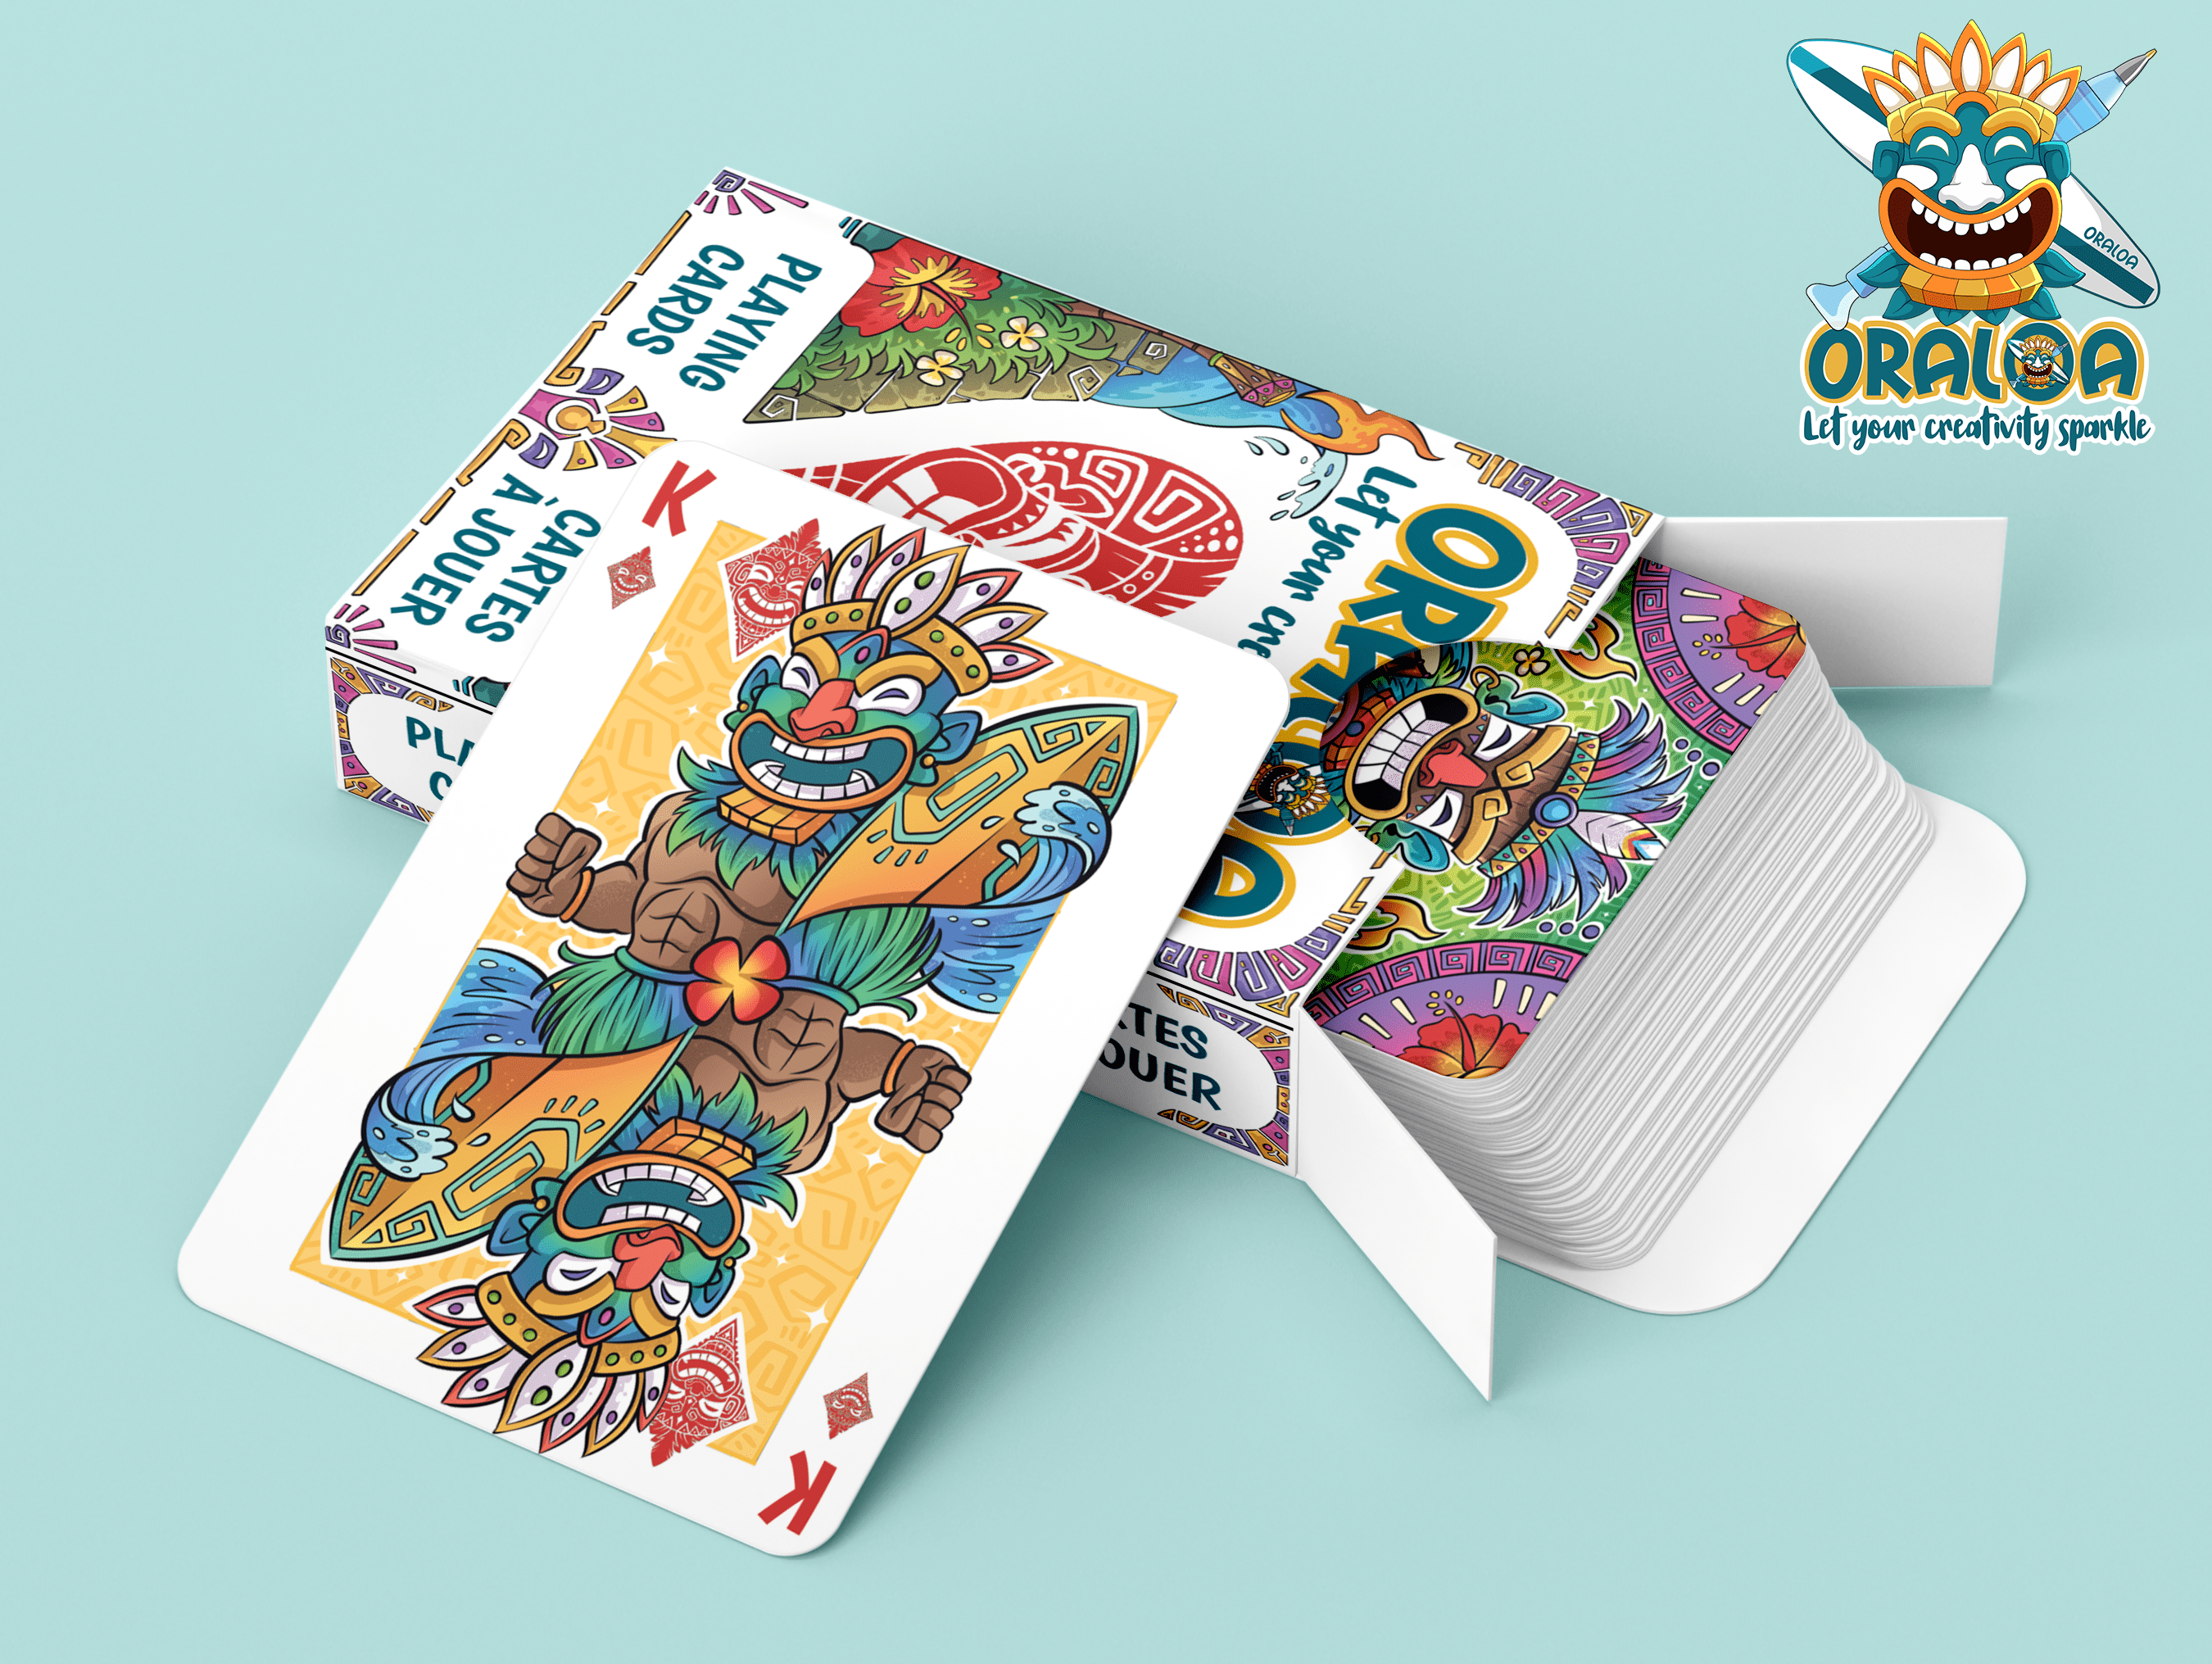 Oraloa Game cards